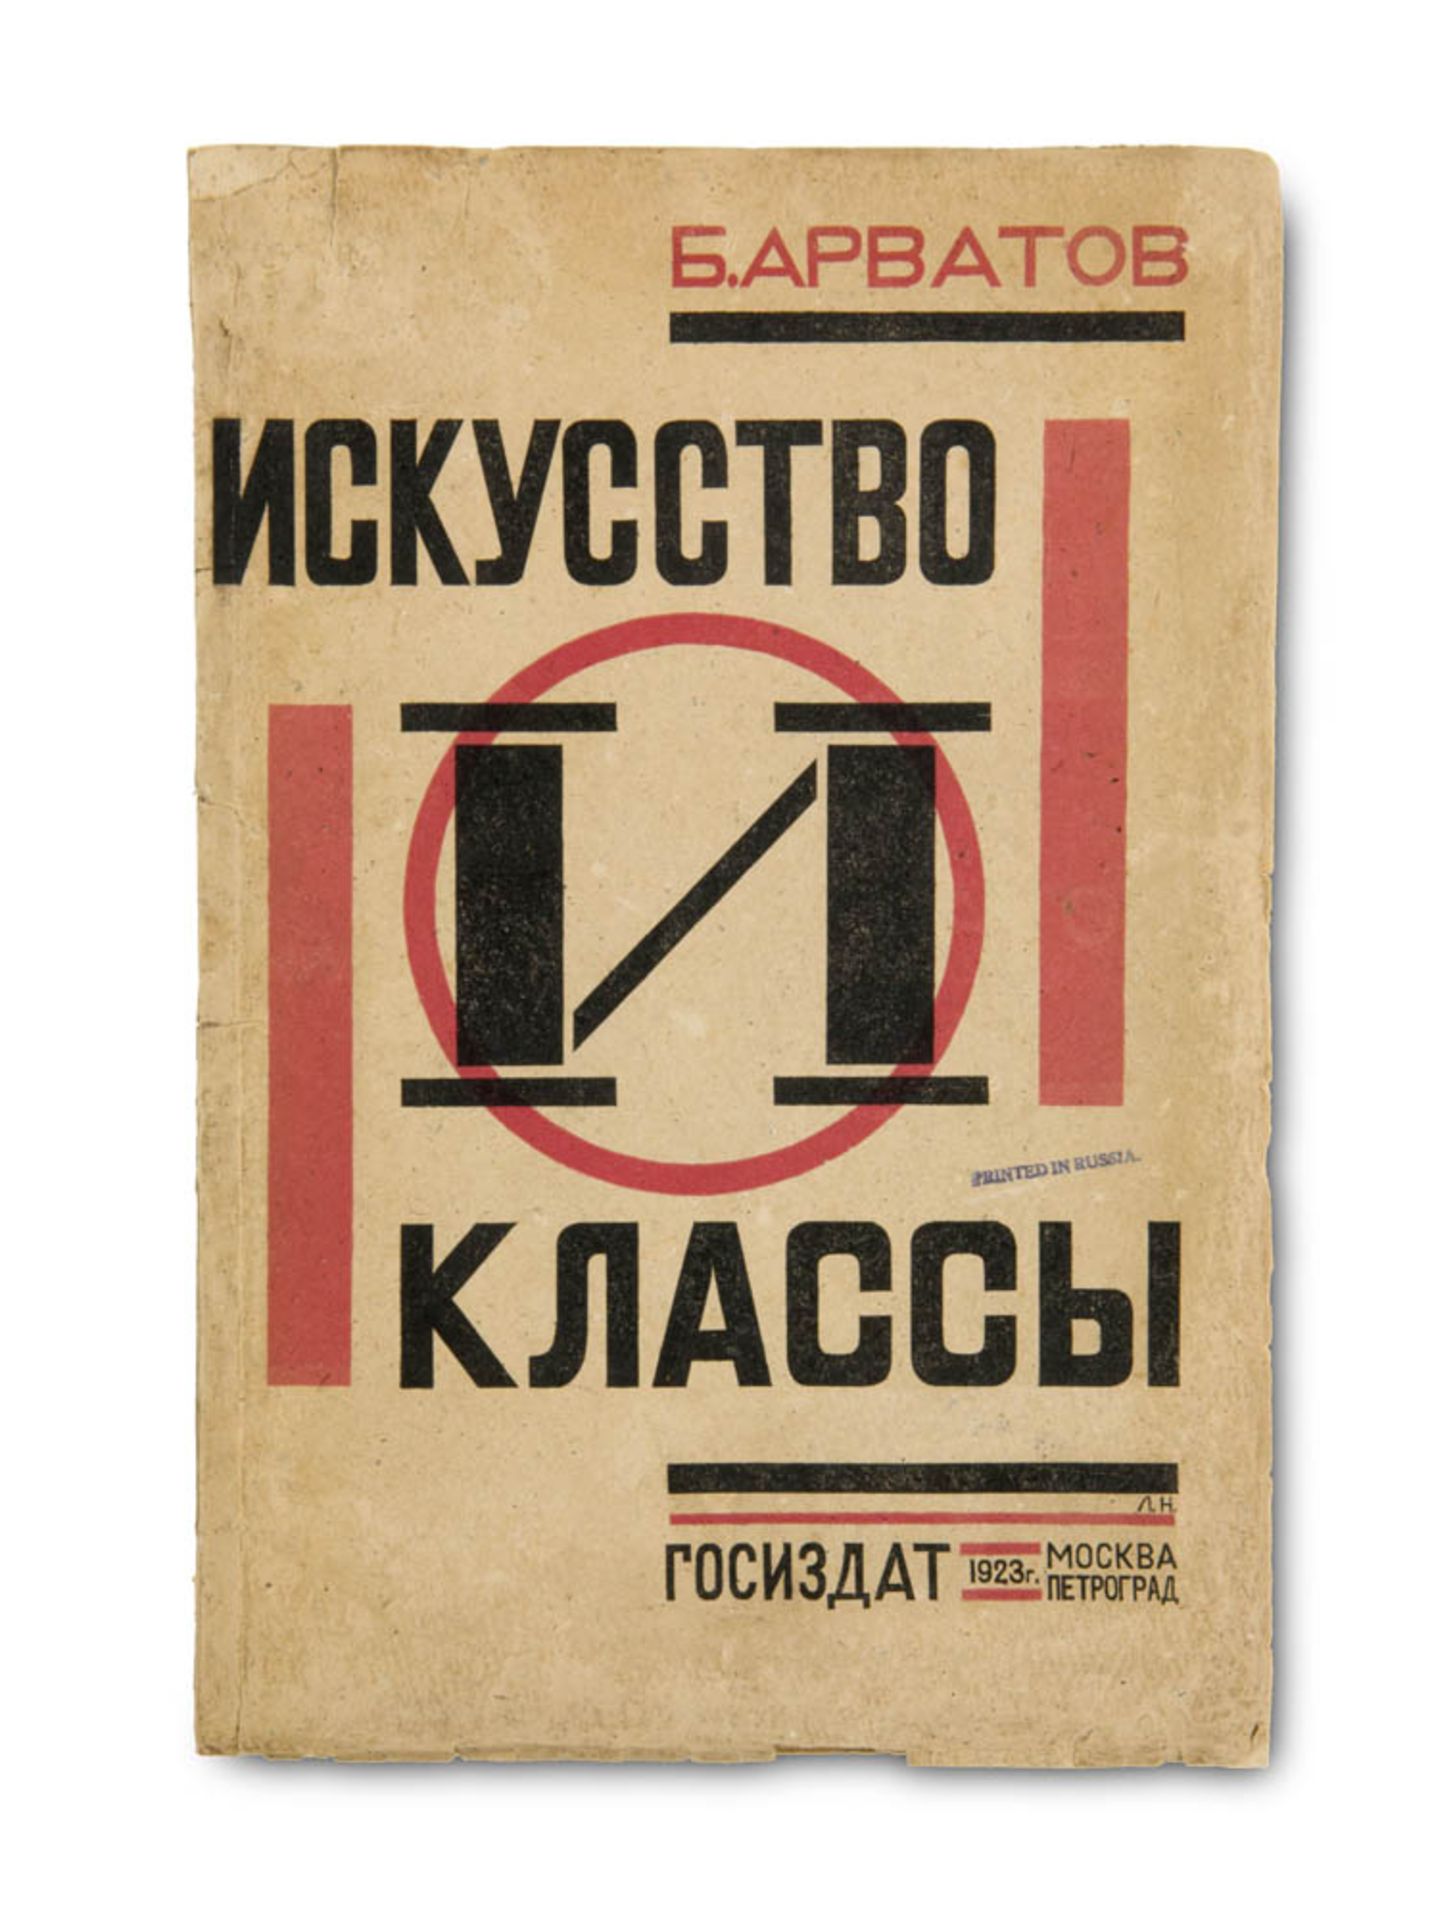 Russische Avantgarde - - Iskusstwo i klassy. (Kunst und Klassen). Moskau/Petrograd, 1923. 88 S.